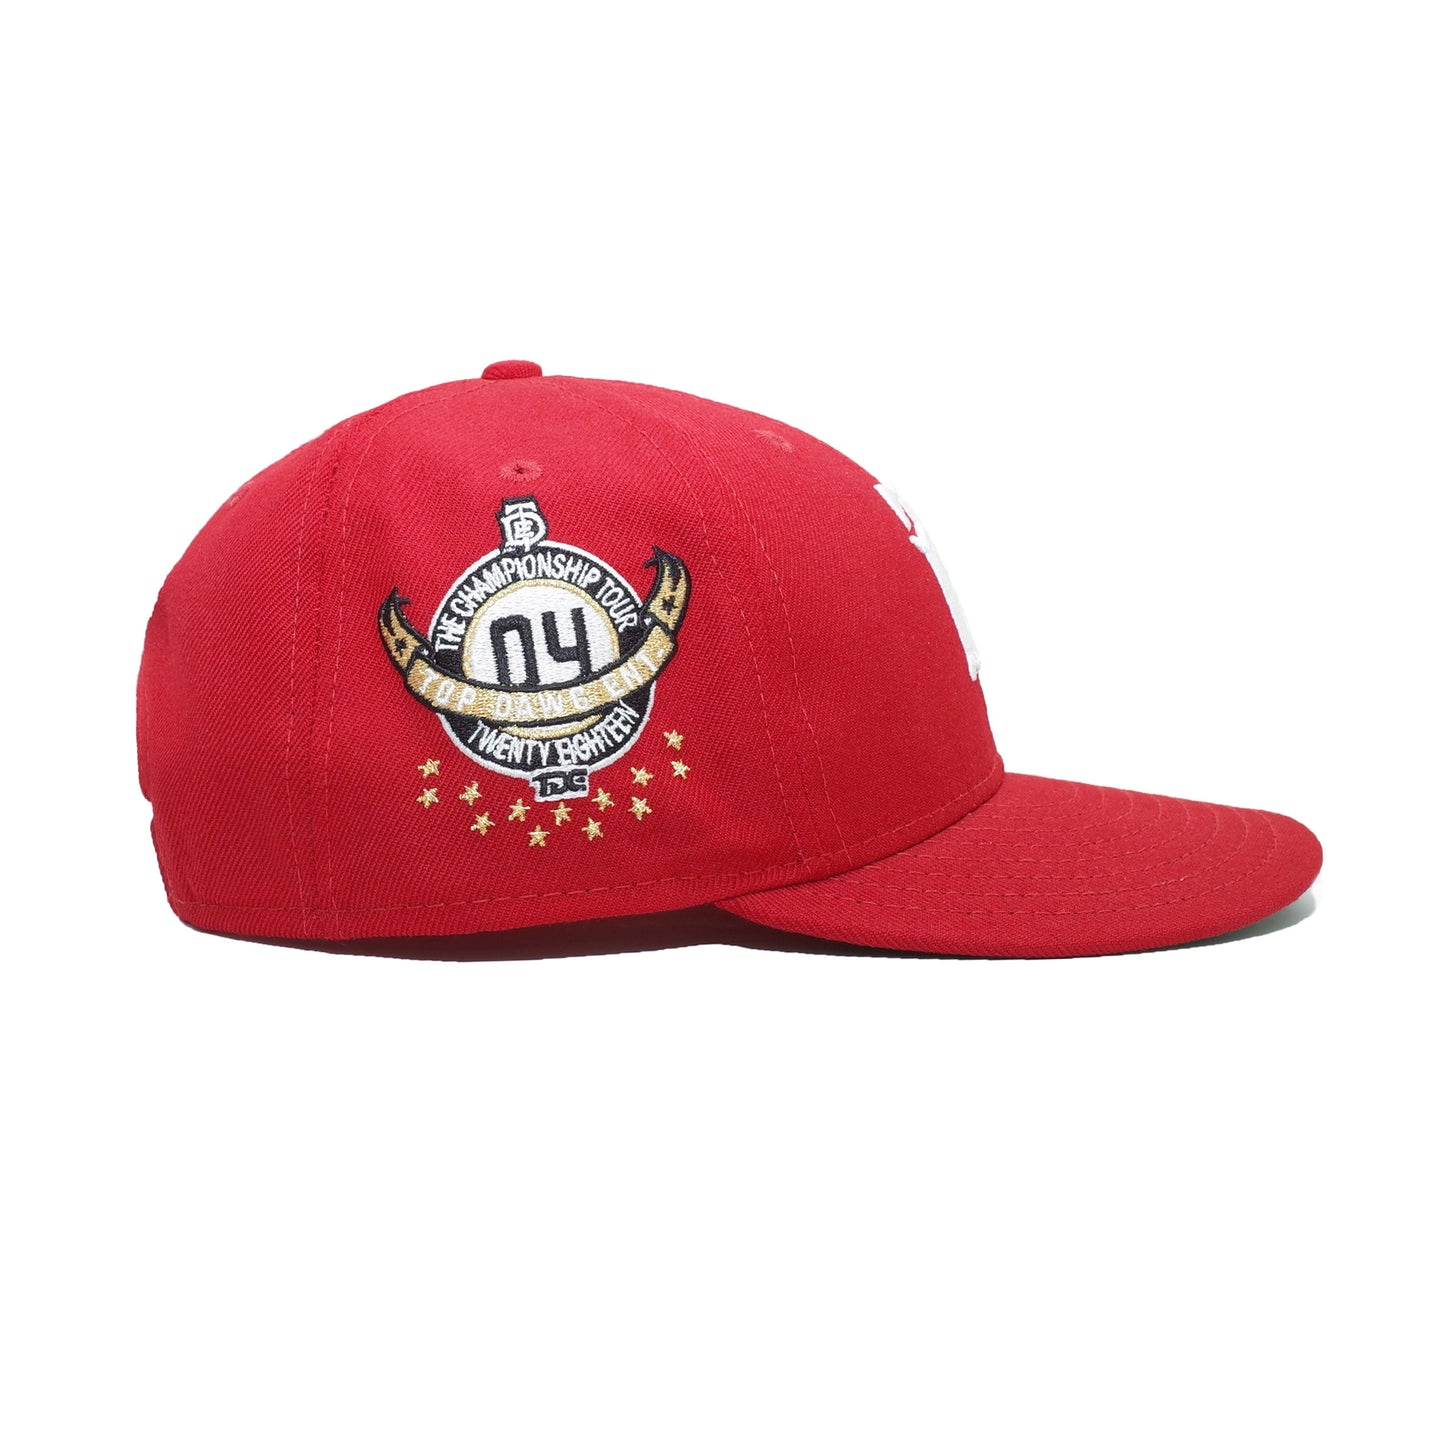 TDE x New Era Championship Hat (Red)